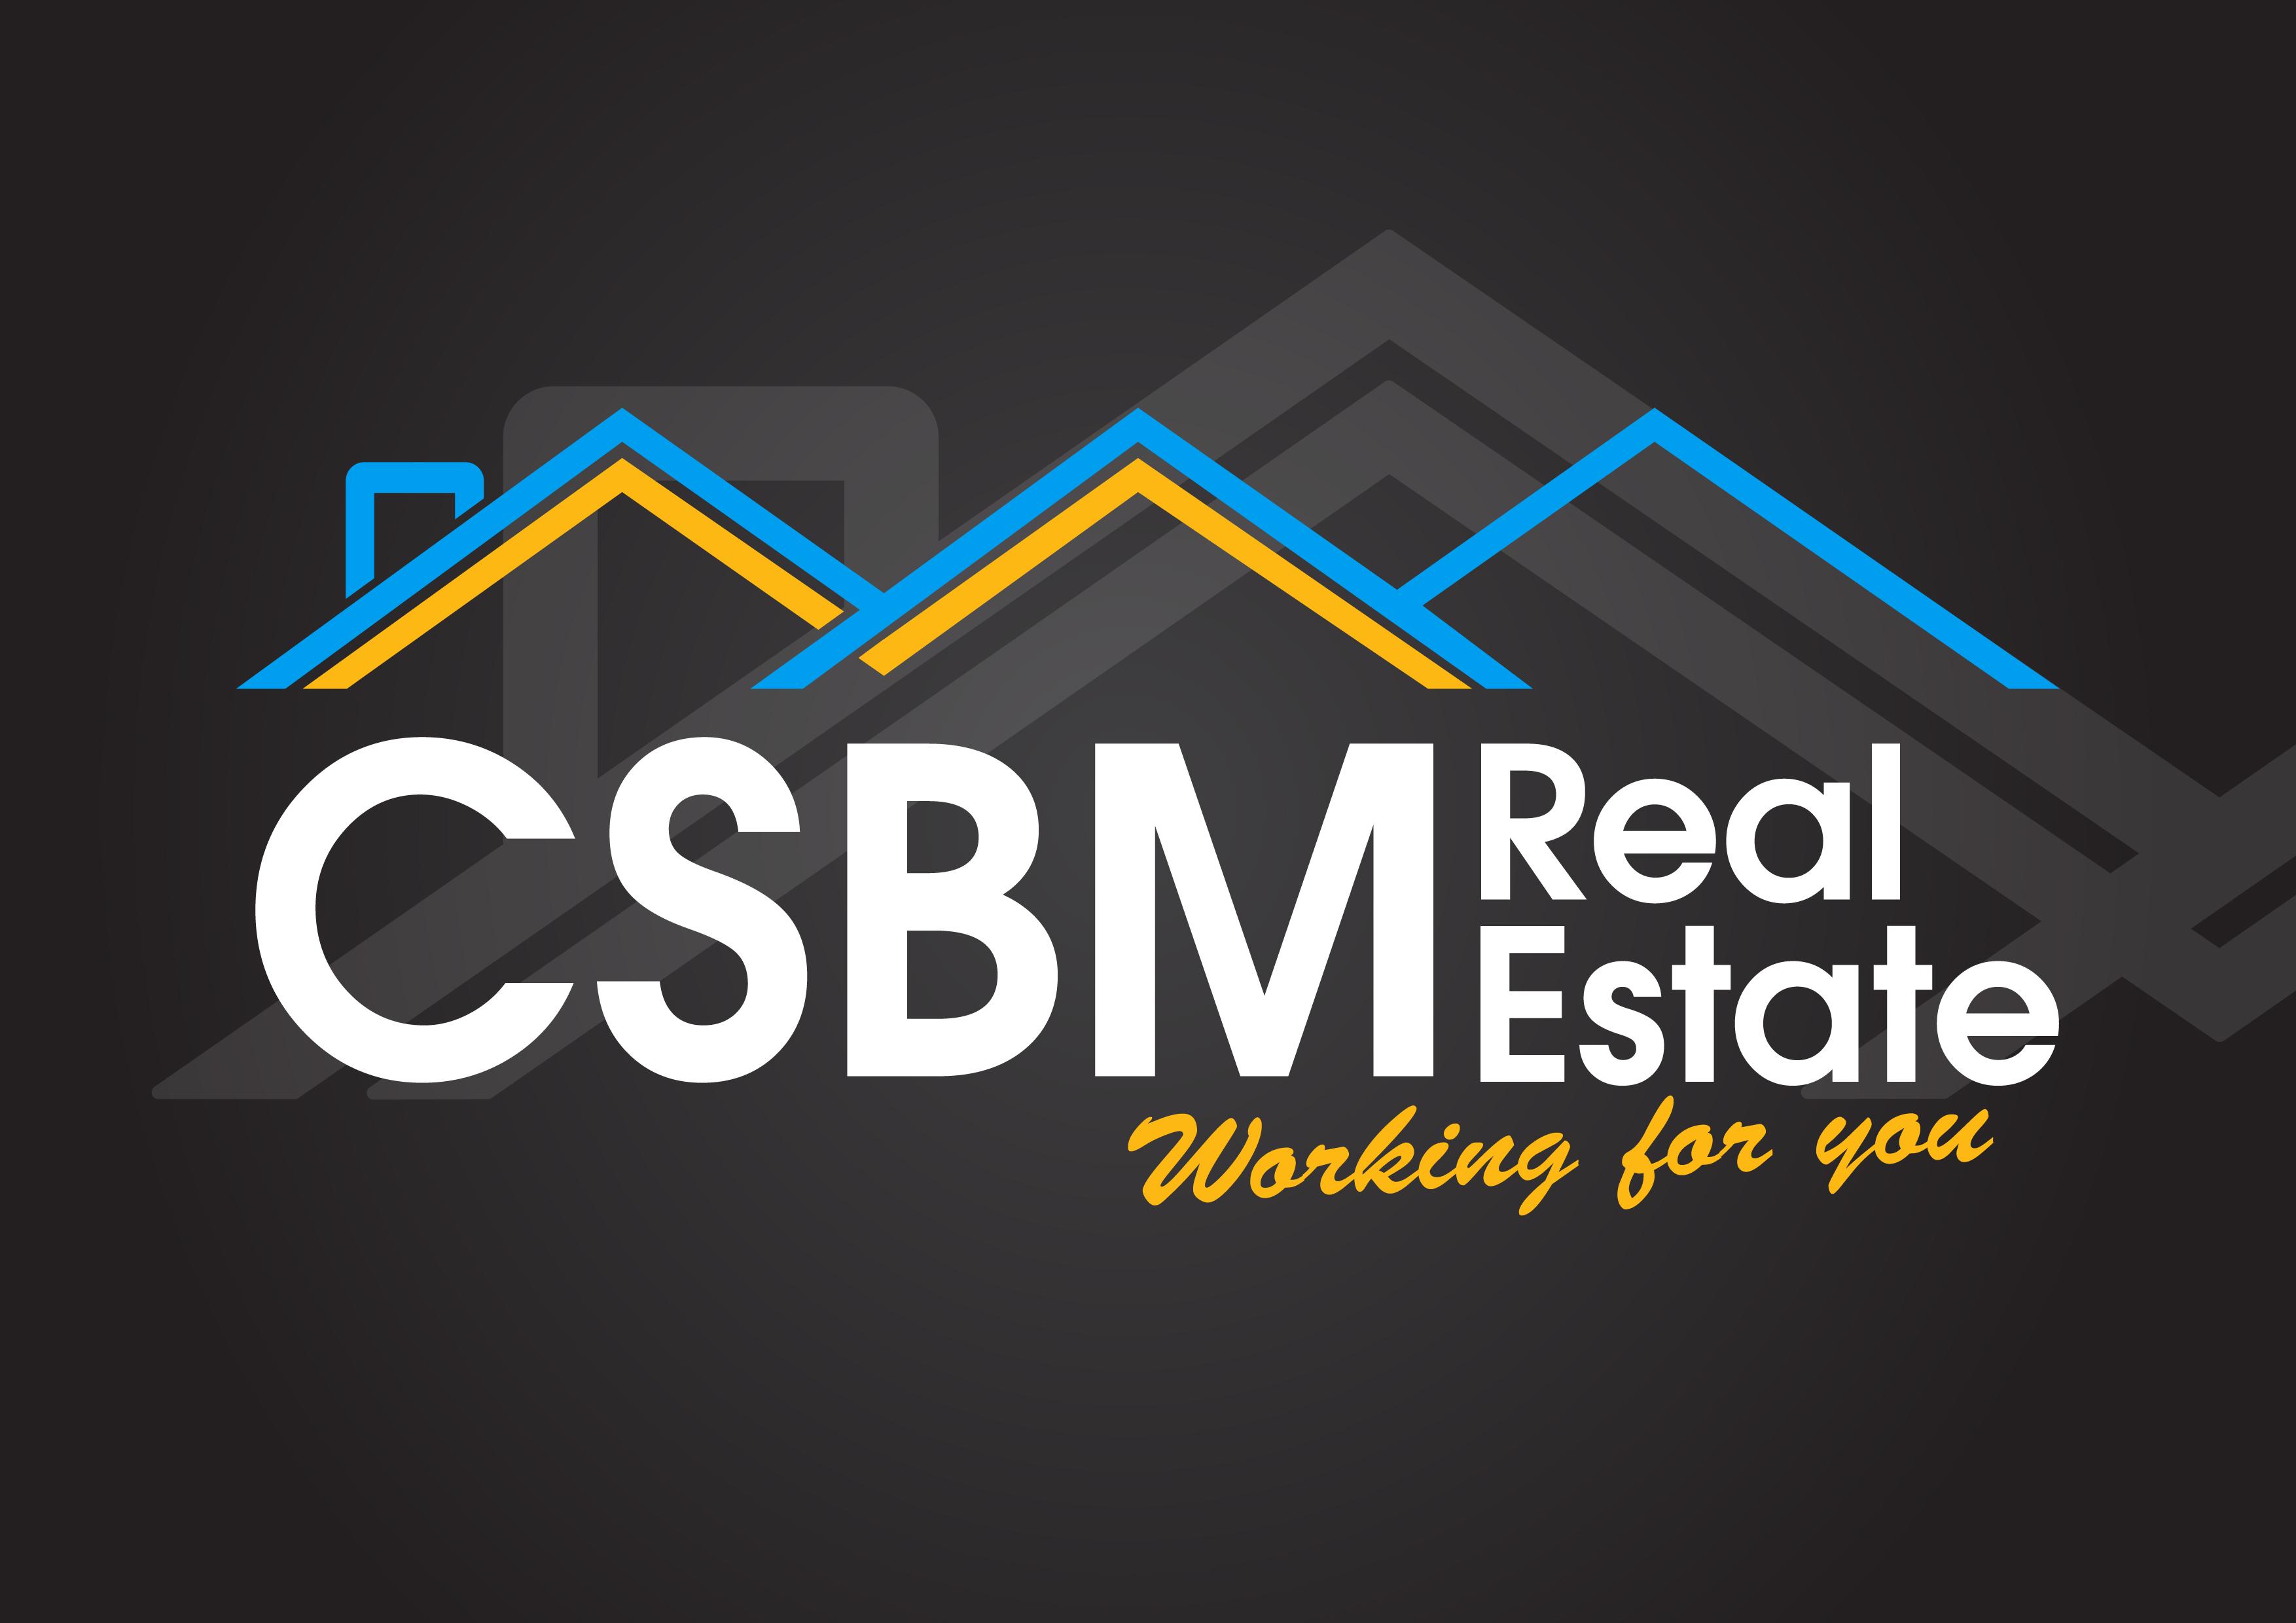 CSBM Real Estate Logo 2017.jpg